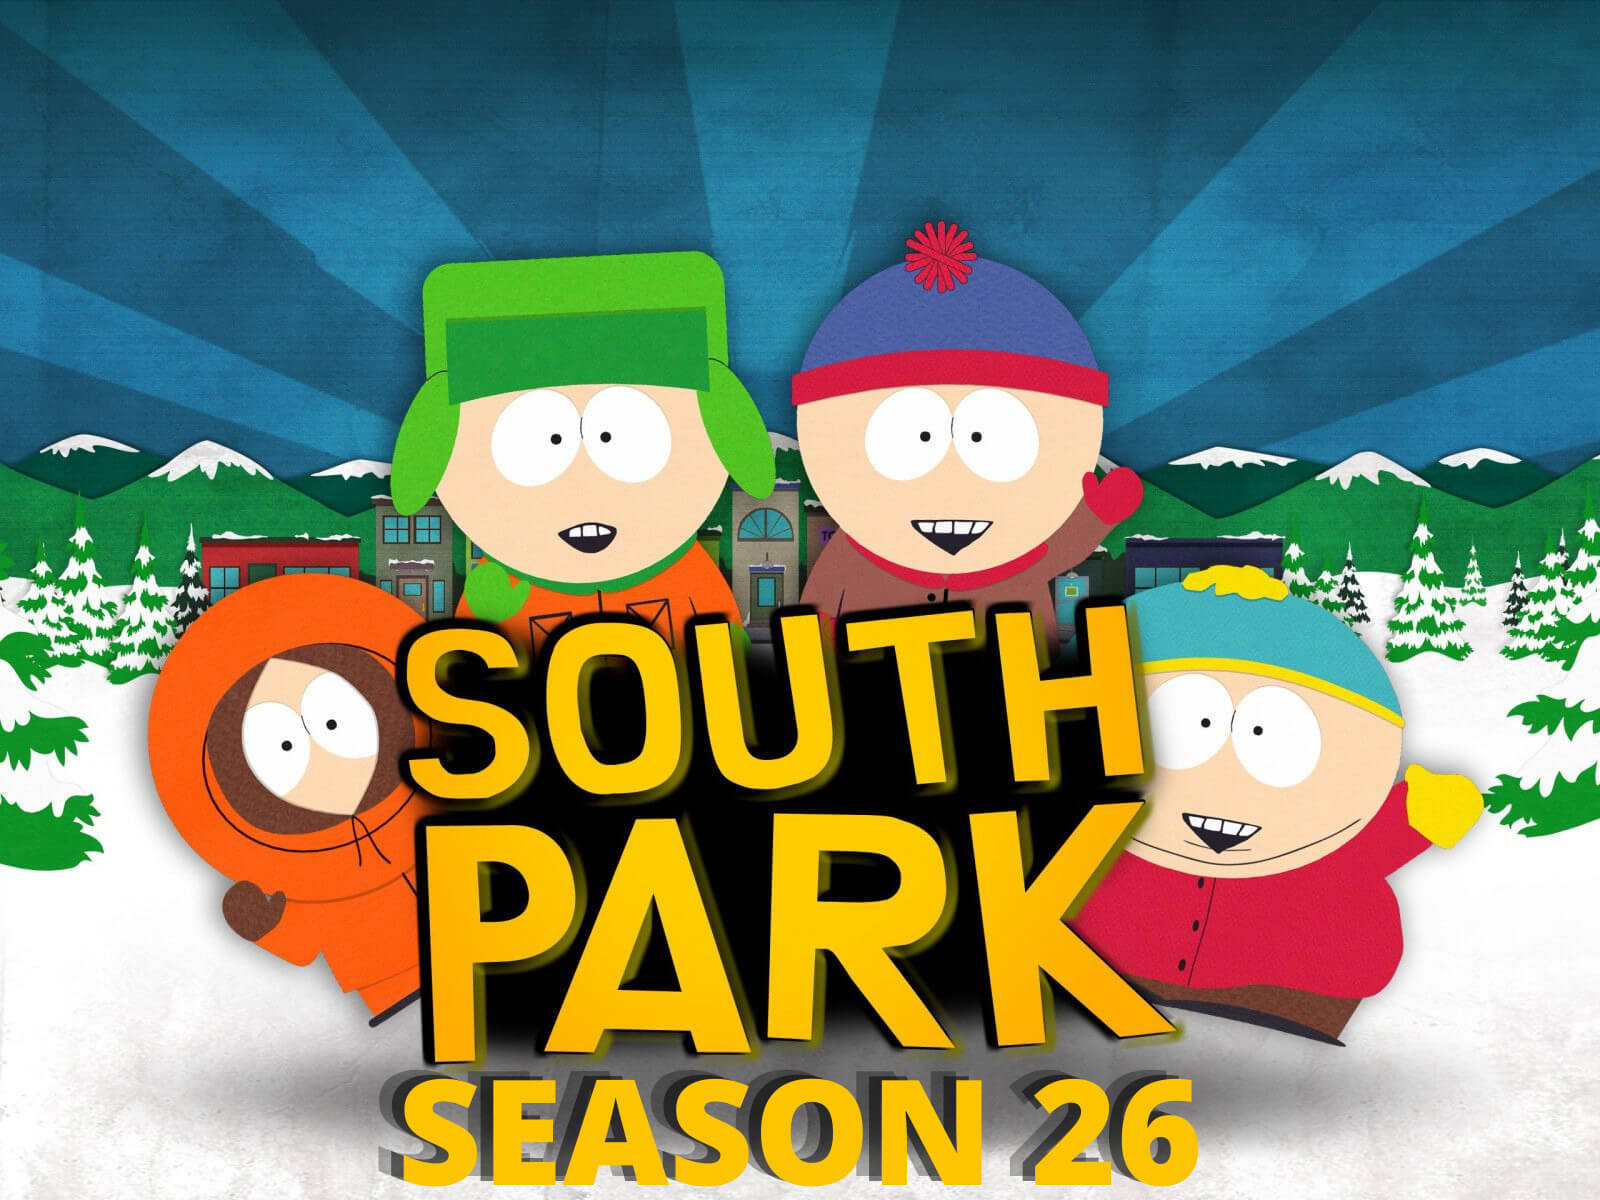 South Park Season 26 Premiere Date